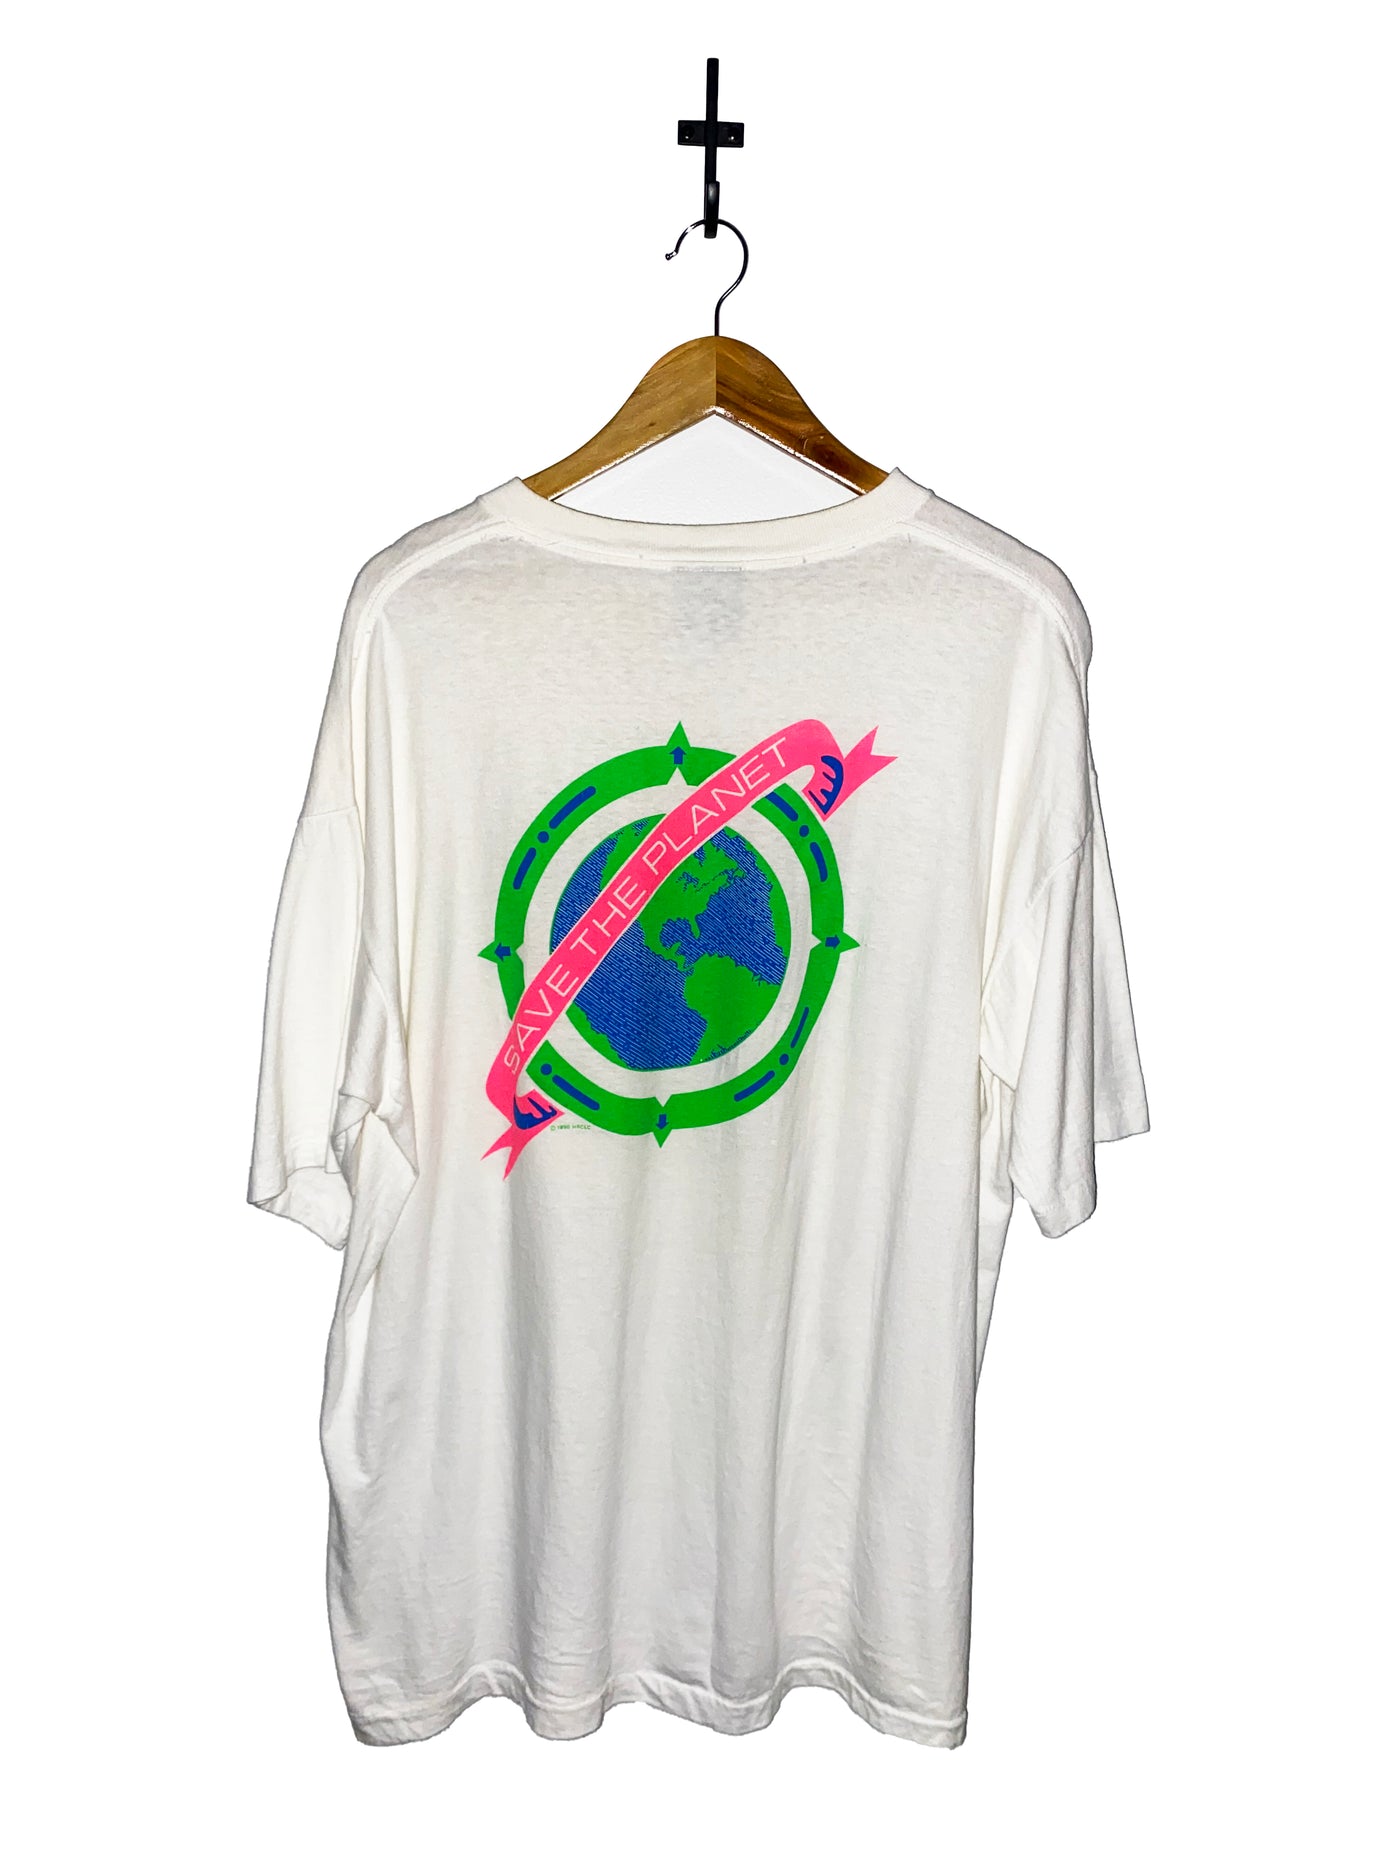 Vintage 1990 Hard Rock Cafe Save The Planet T-Shirt